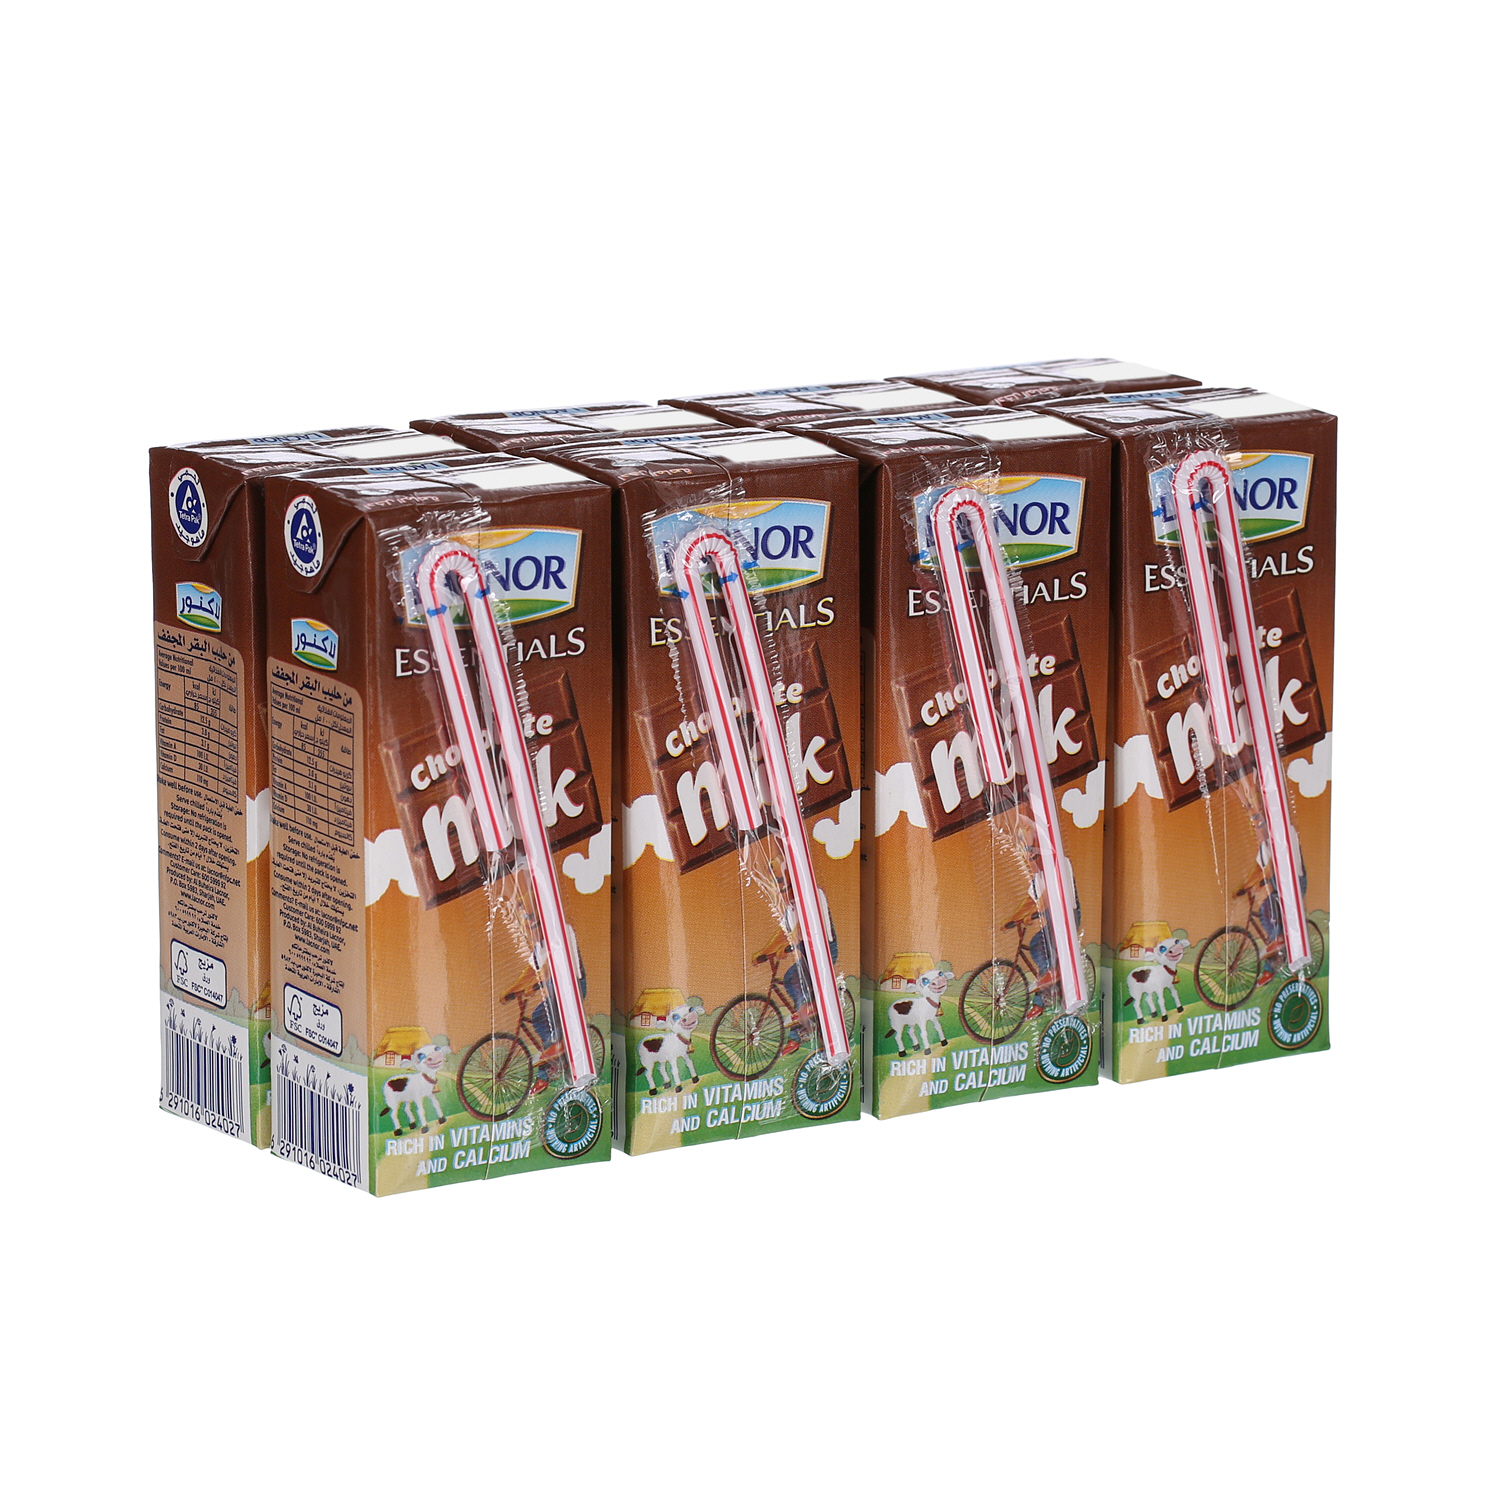 Lacnor Chocolate Milk 200 ml x 8 Pack